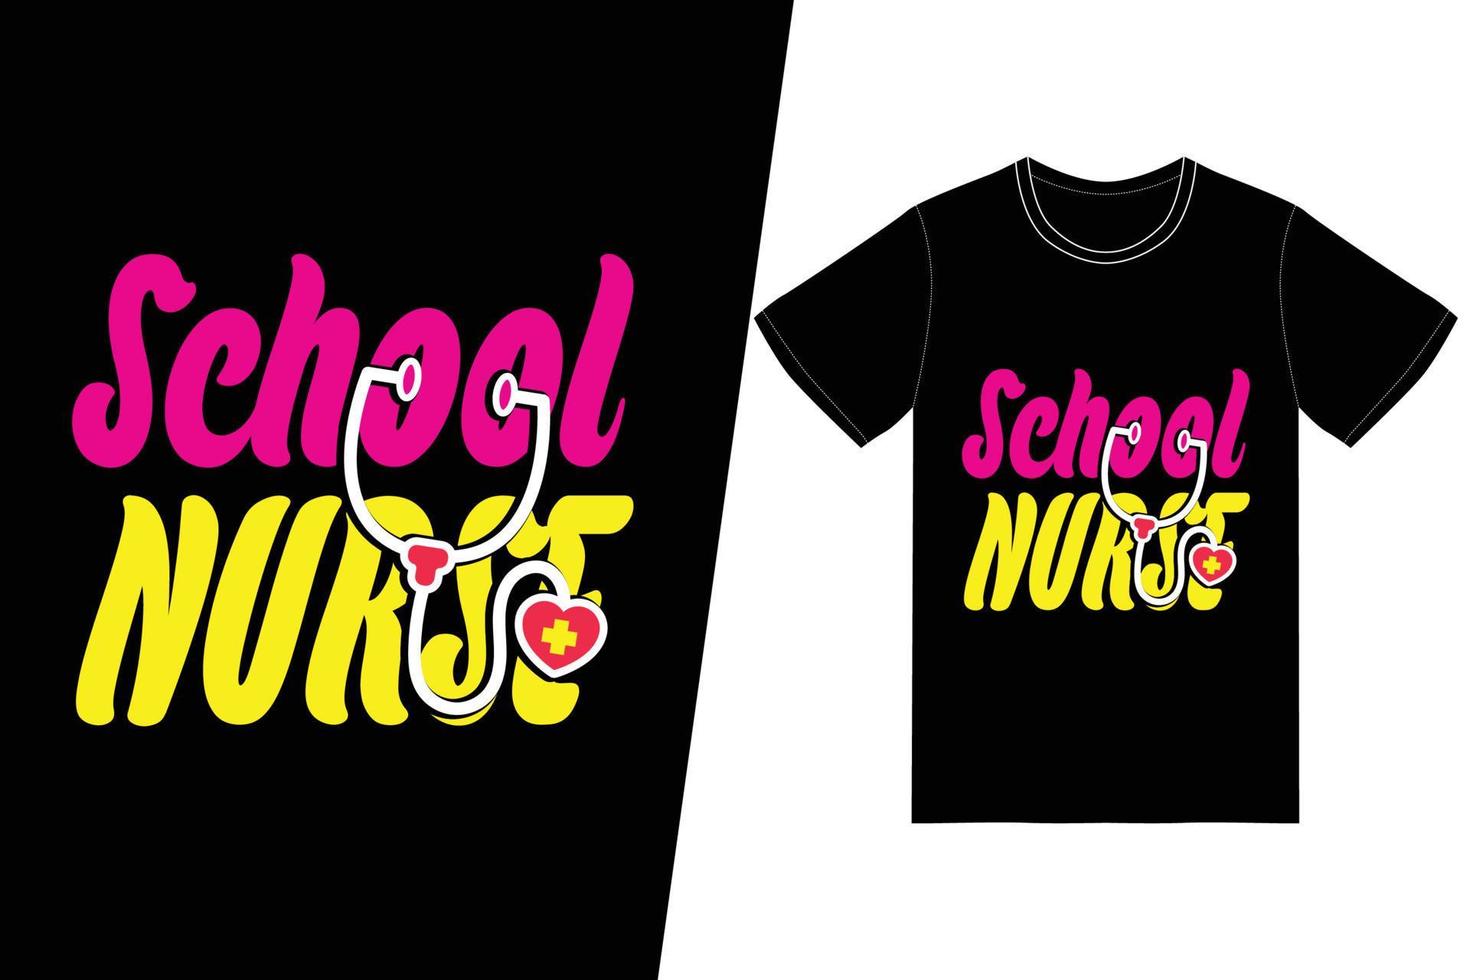 School nurse Nurse day design. Nurse t-shirt design vector. For t-shirt print and other uses. vector